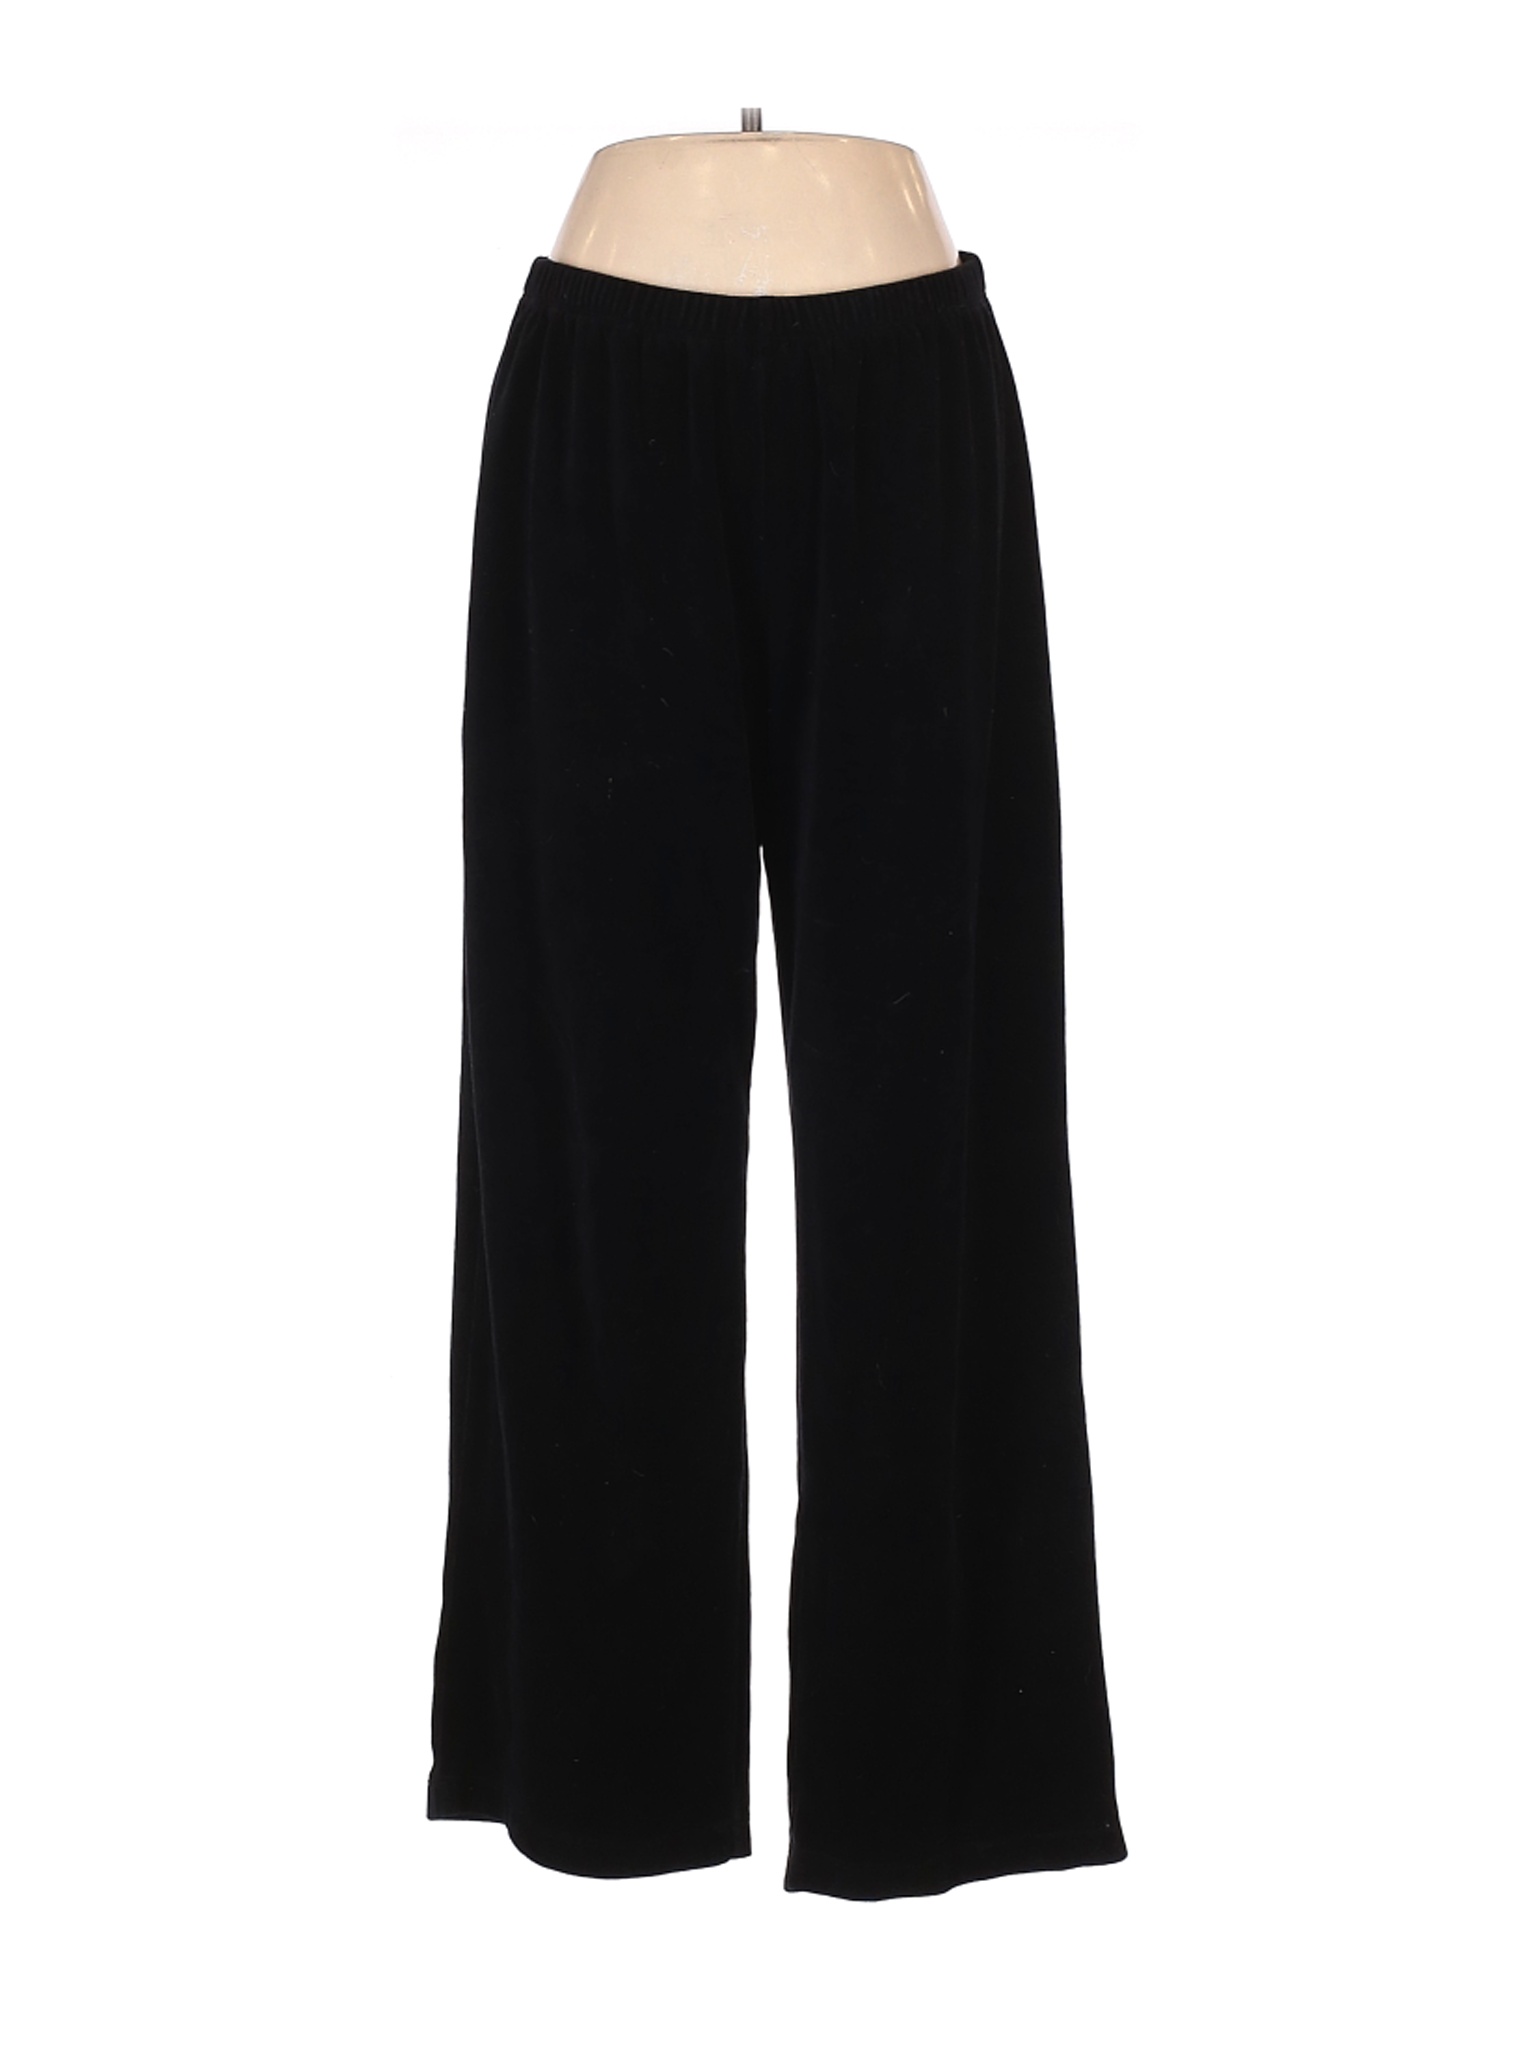 Hot Cotton Women Black Casual Pants L | eBay